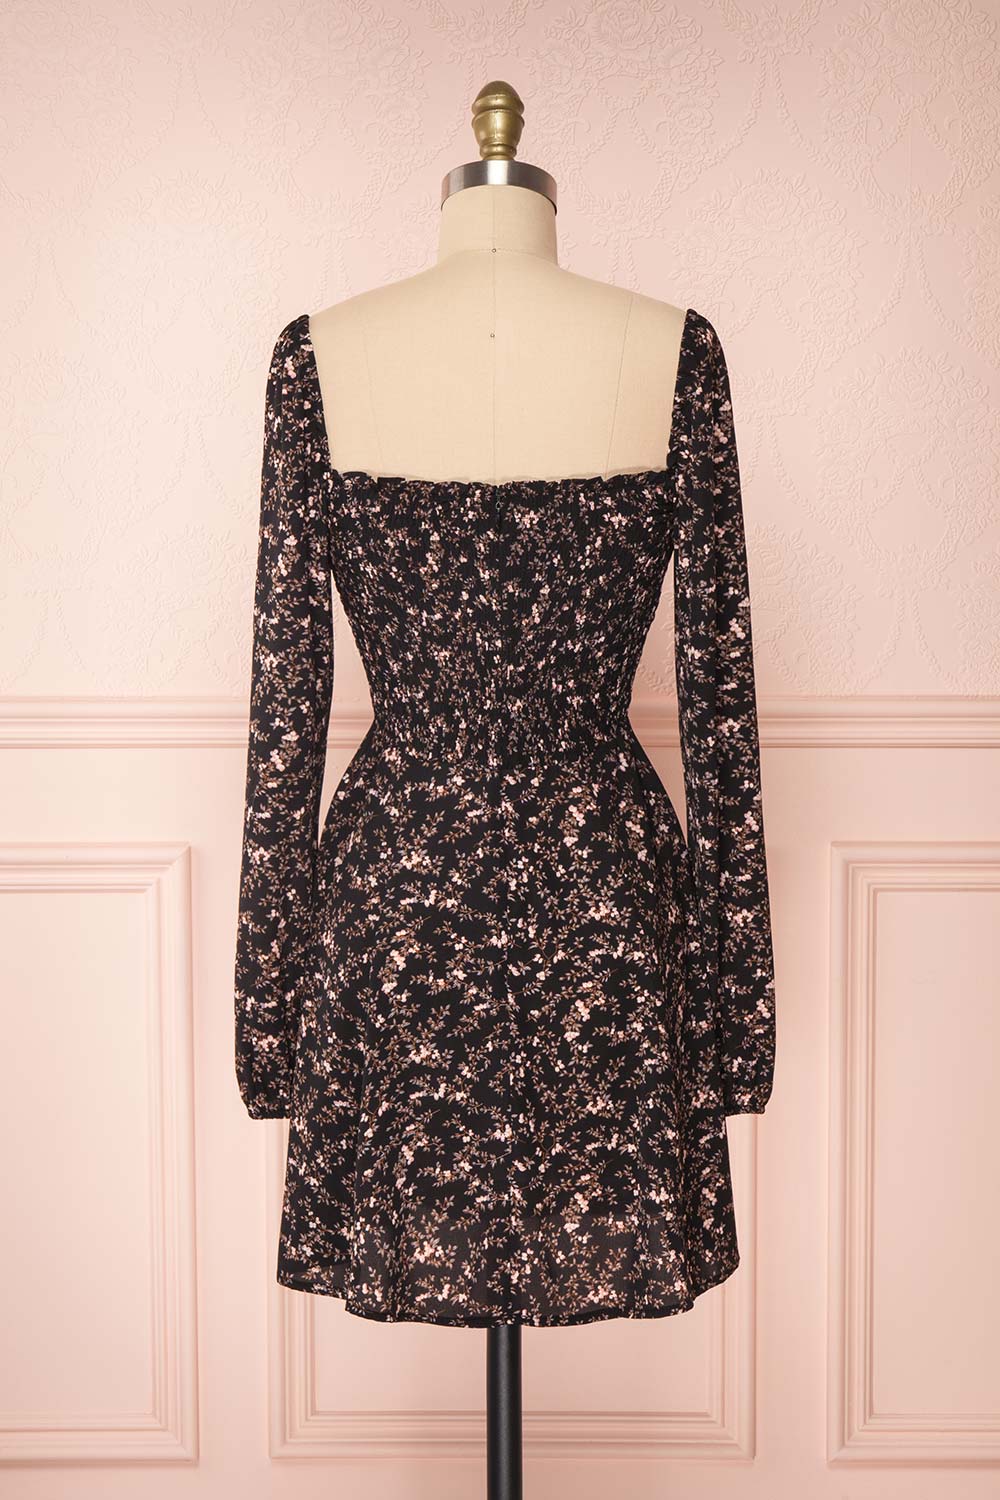 Javouhey Black Floral Long Sleeved A-Line Dress | Boutique 1861 back view 